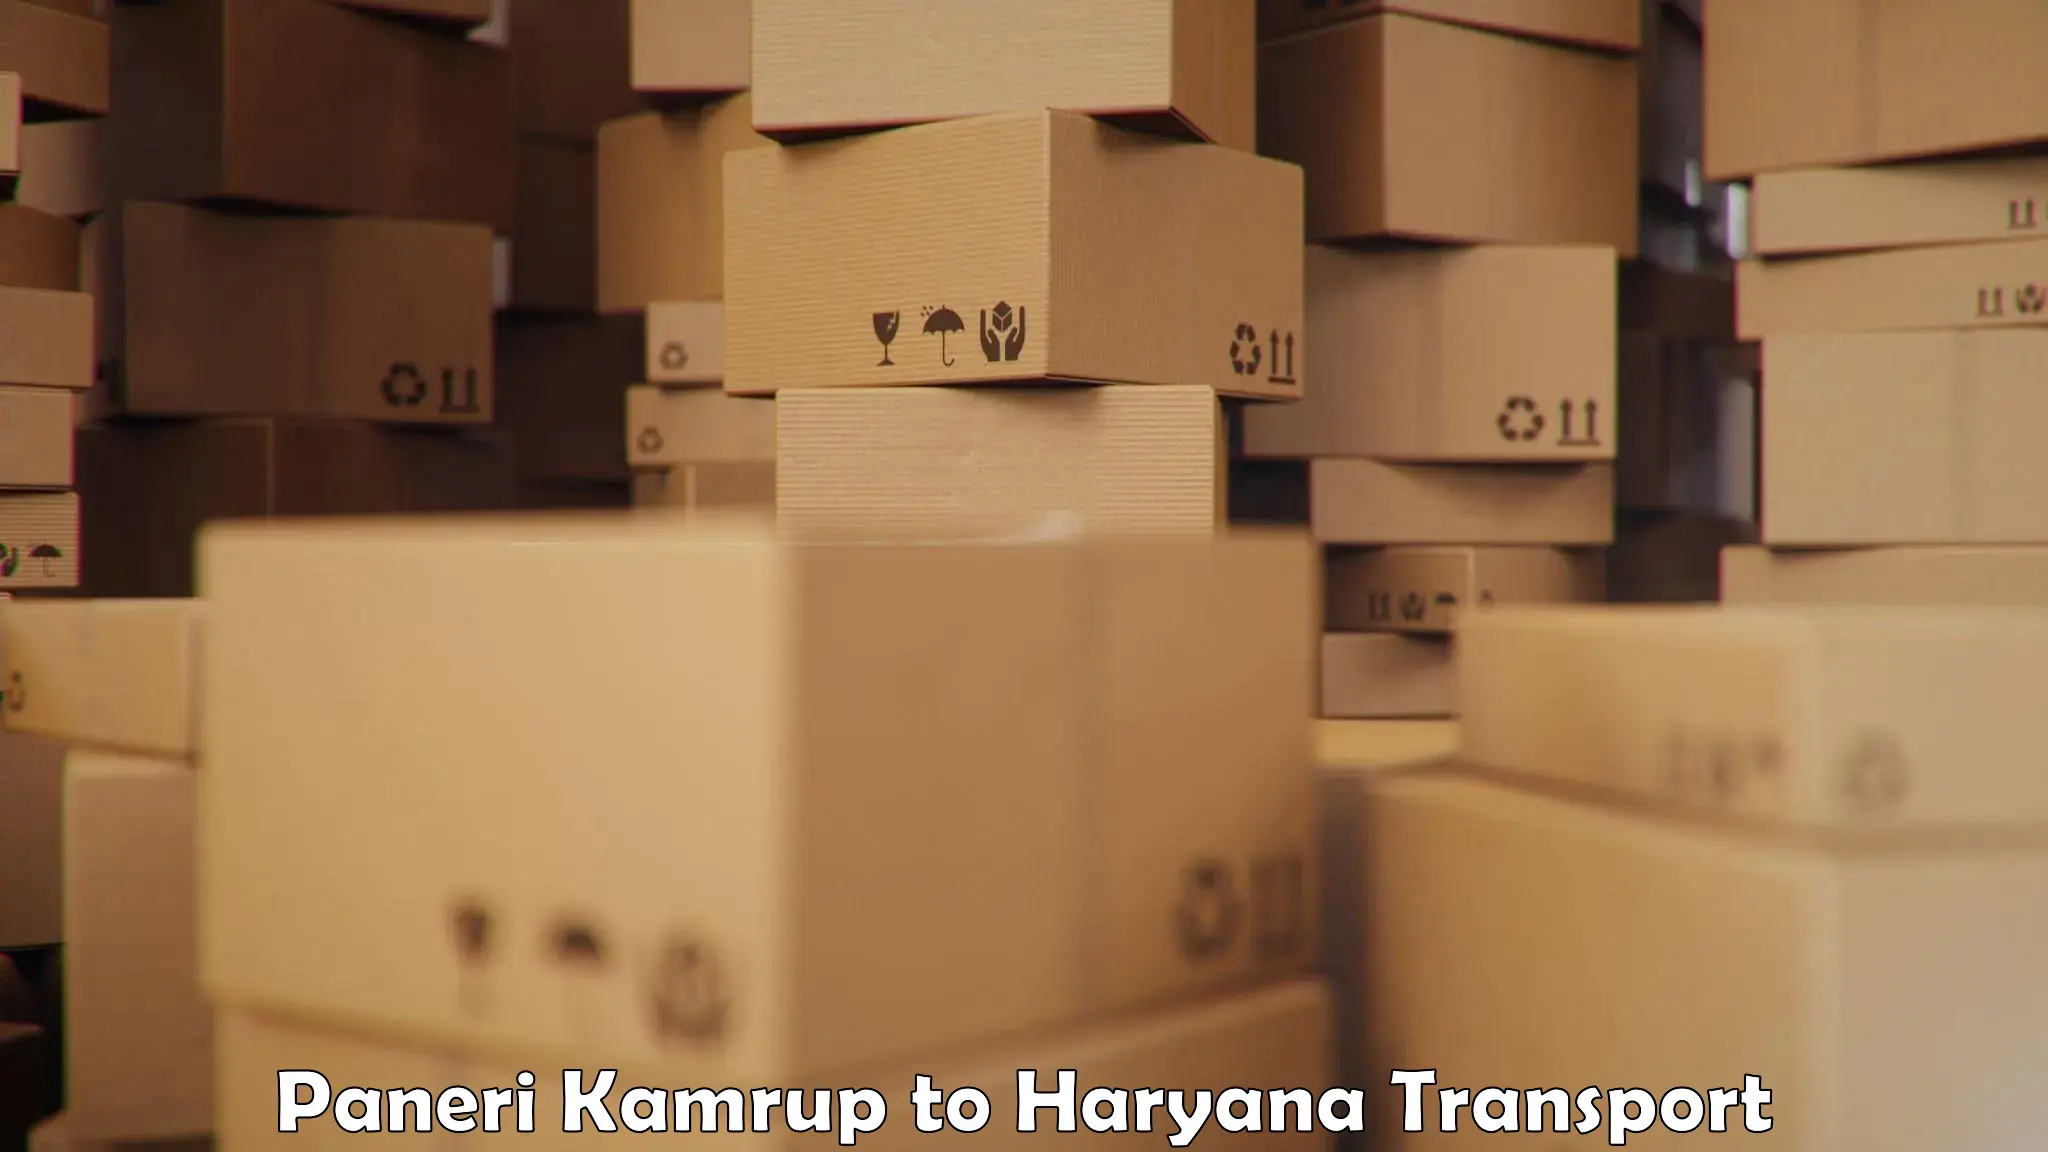 Truck transport companies in India Paneri Kamrup to Hansi